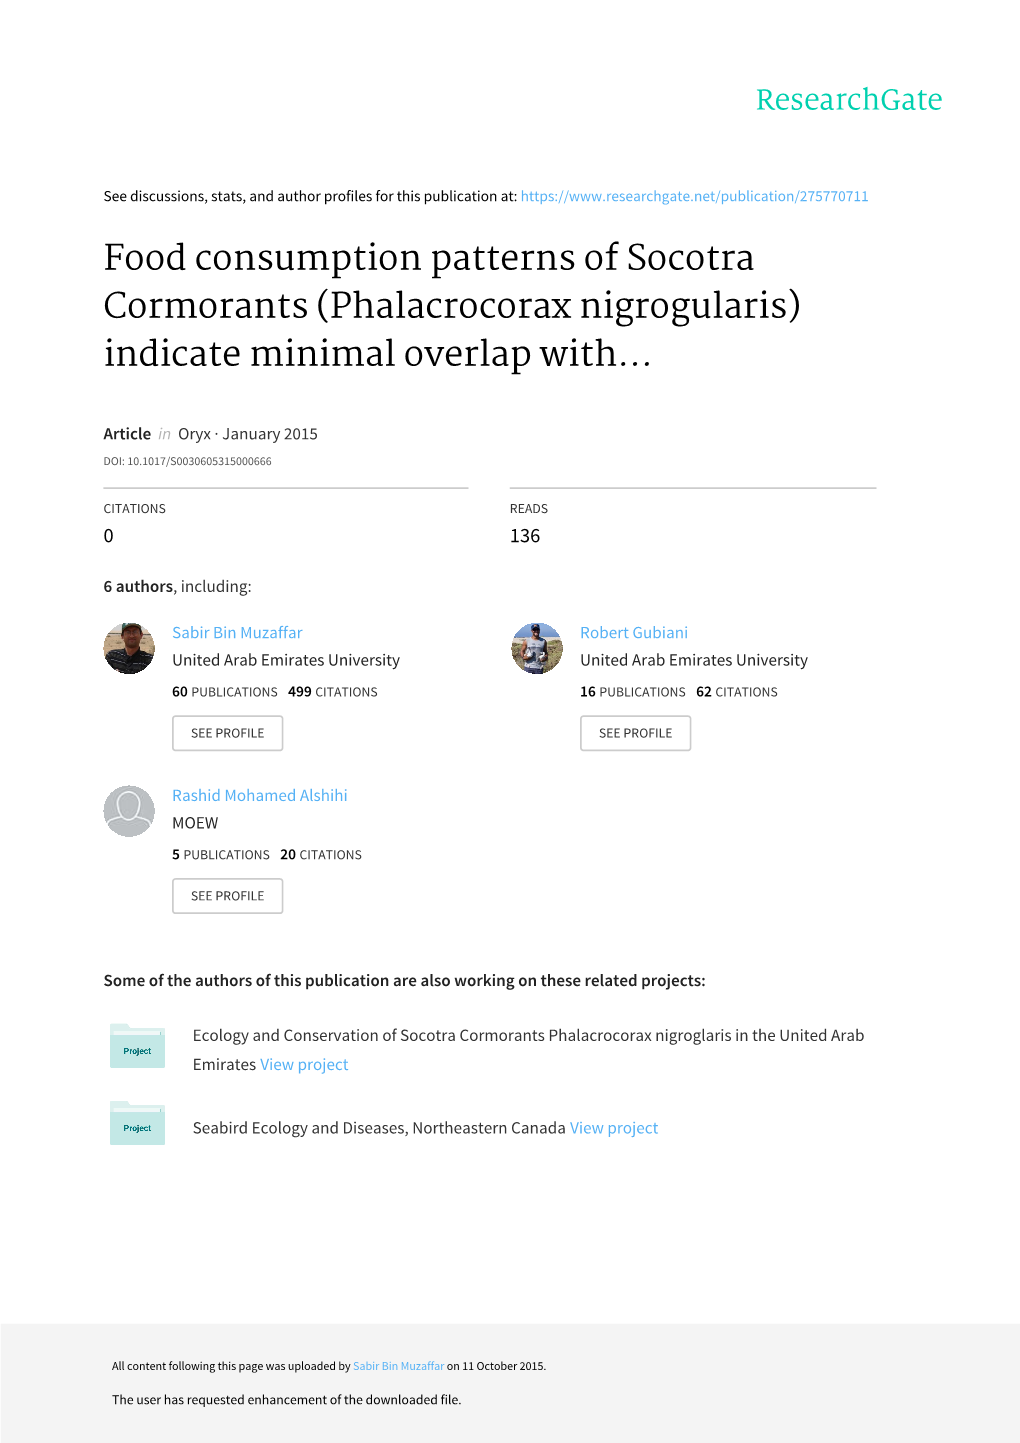 Food Consumption Patterns of Socotra Cormorants (Phalacrocorax Nigrogularis) Indicate Minimal Overlap With